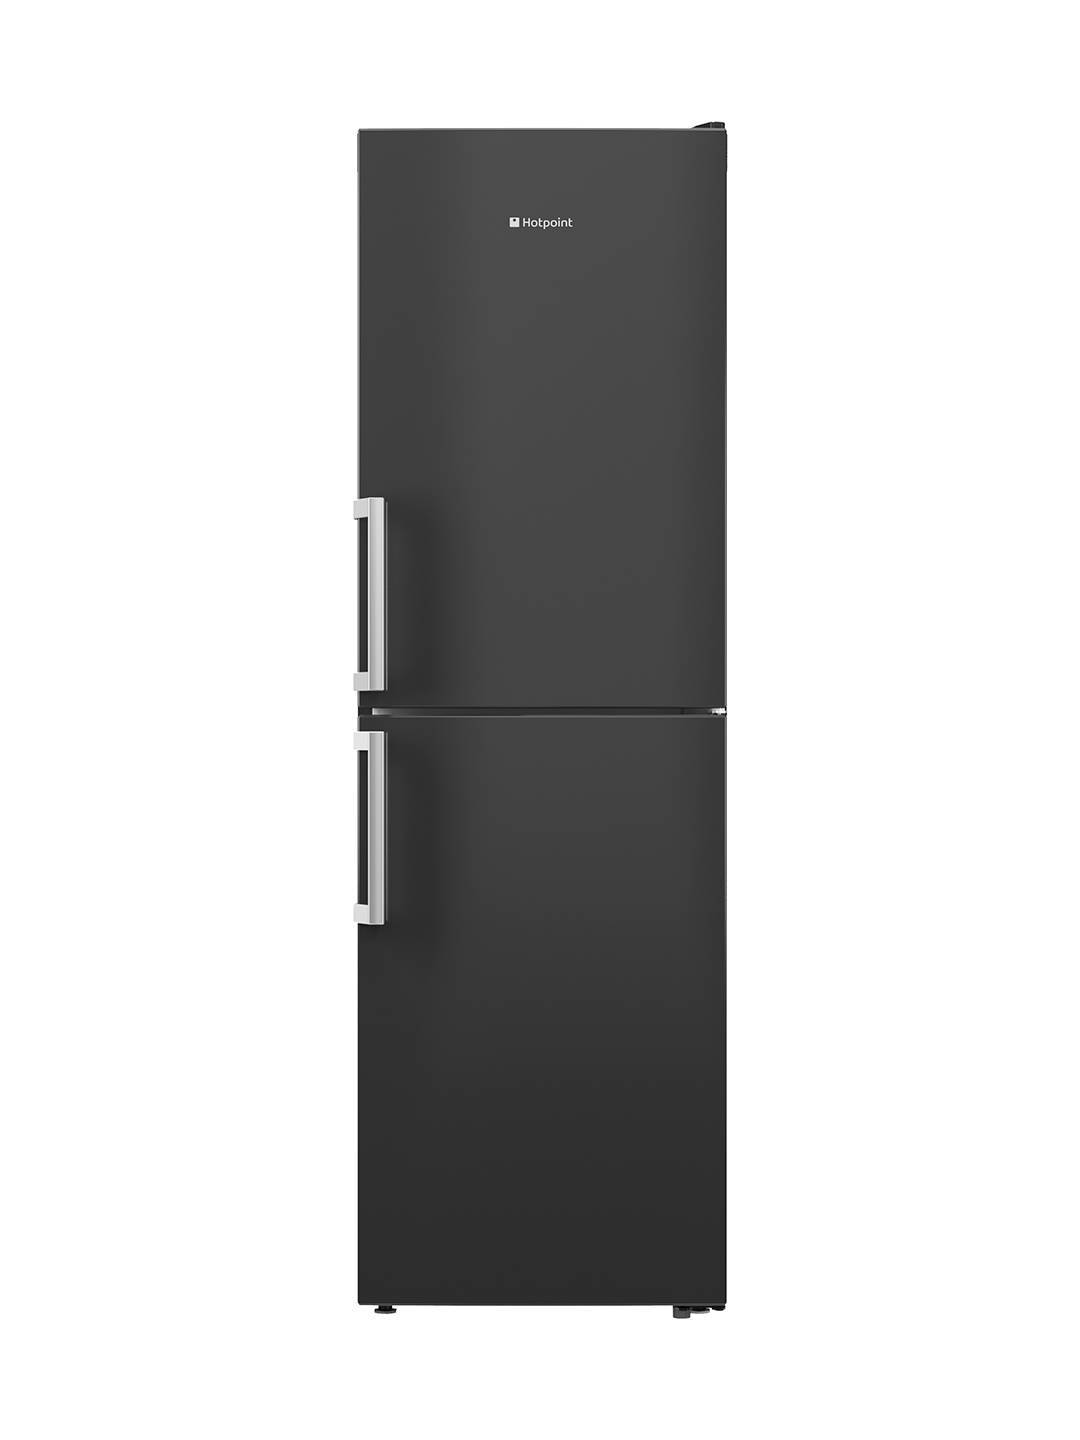 Hotpoint refrigerator freezer